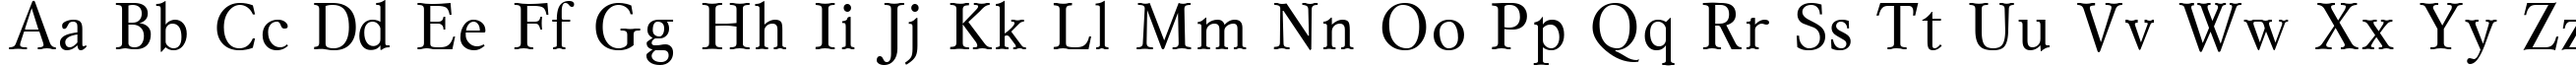 Пример написания английского алфавита шрифтом MyslCTT